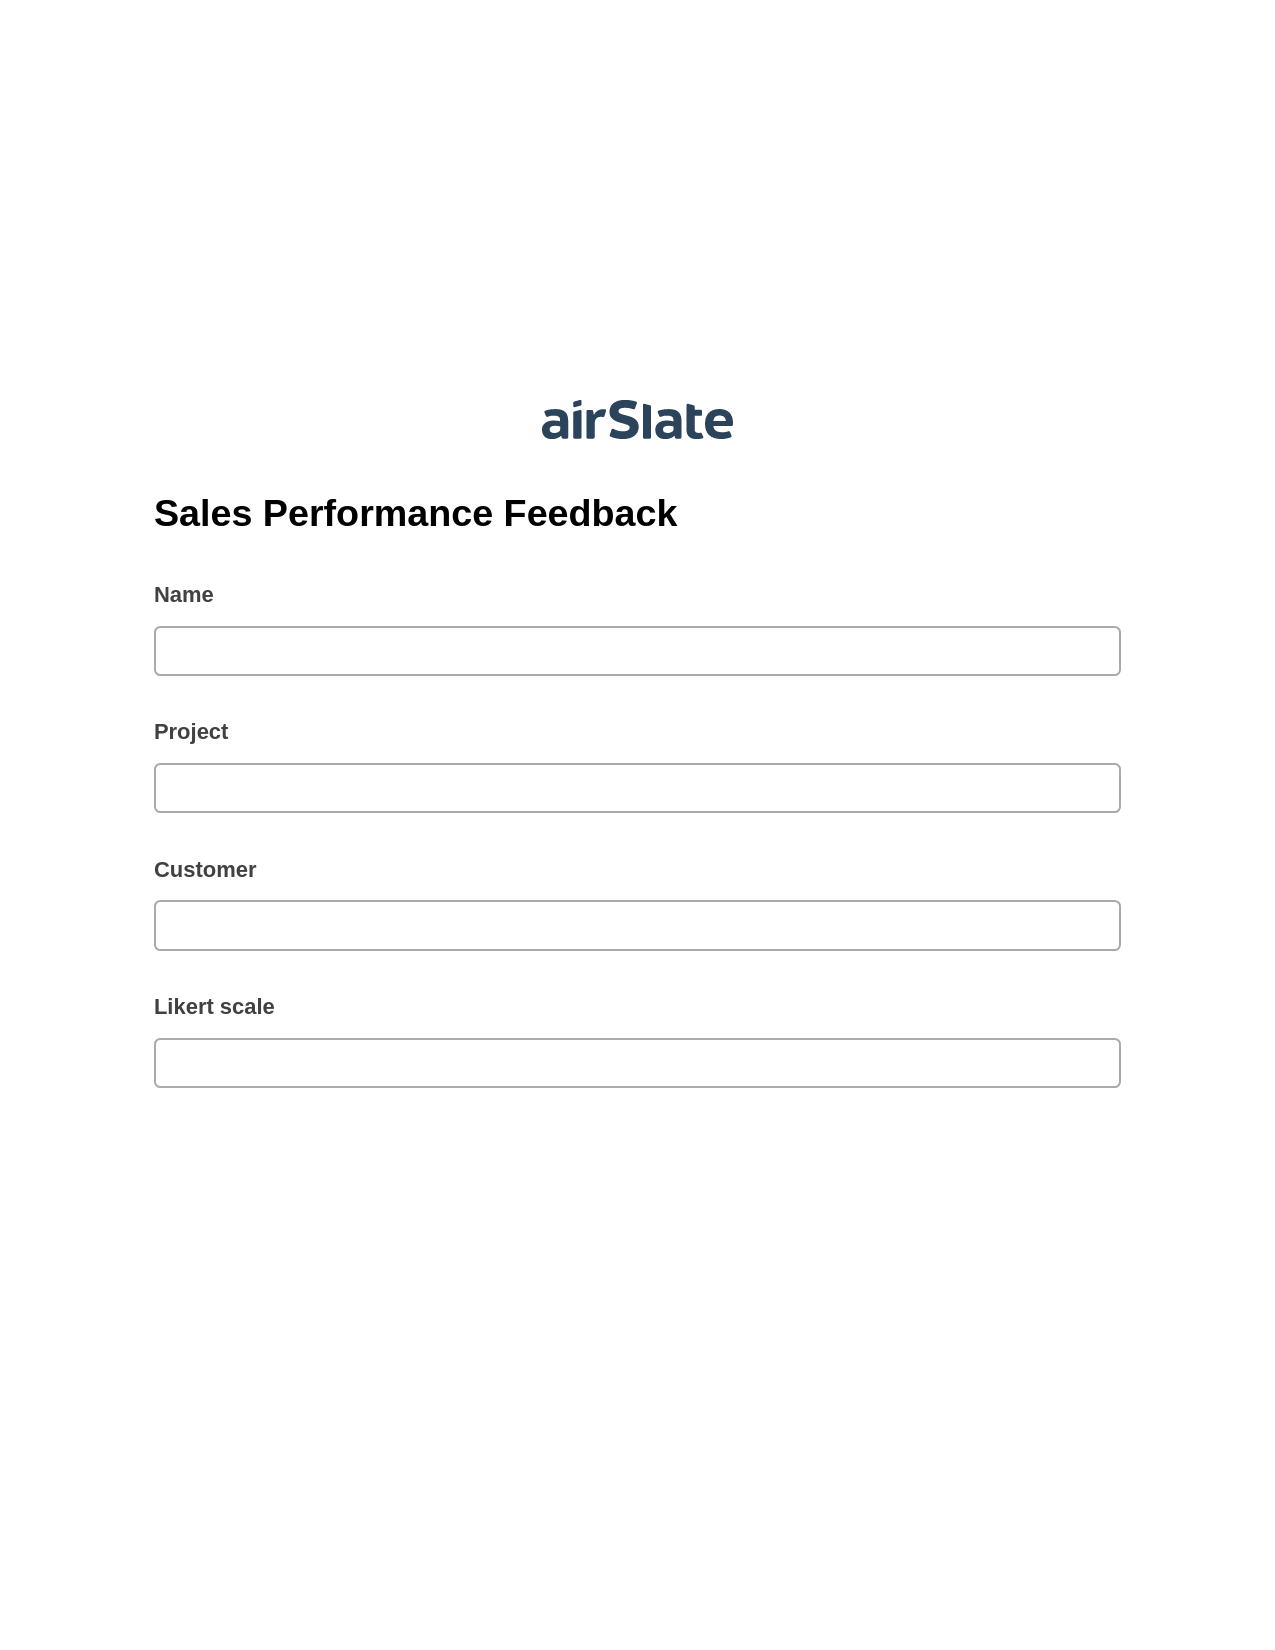 Multirole Sales Performance Feedback Pre-fill from CSV File Bot, Create Salesforce Record Bot, Dropbox Bot